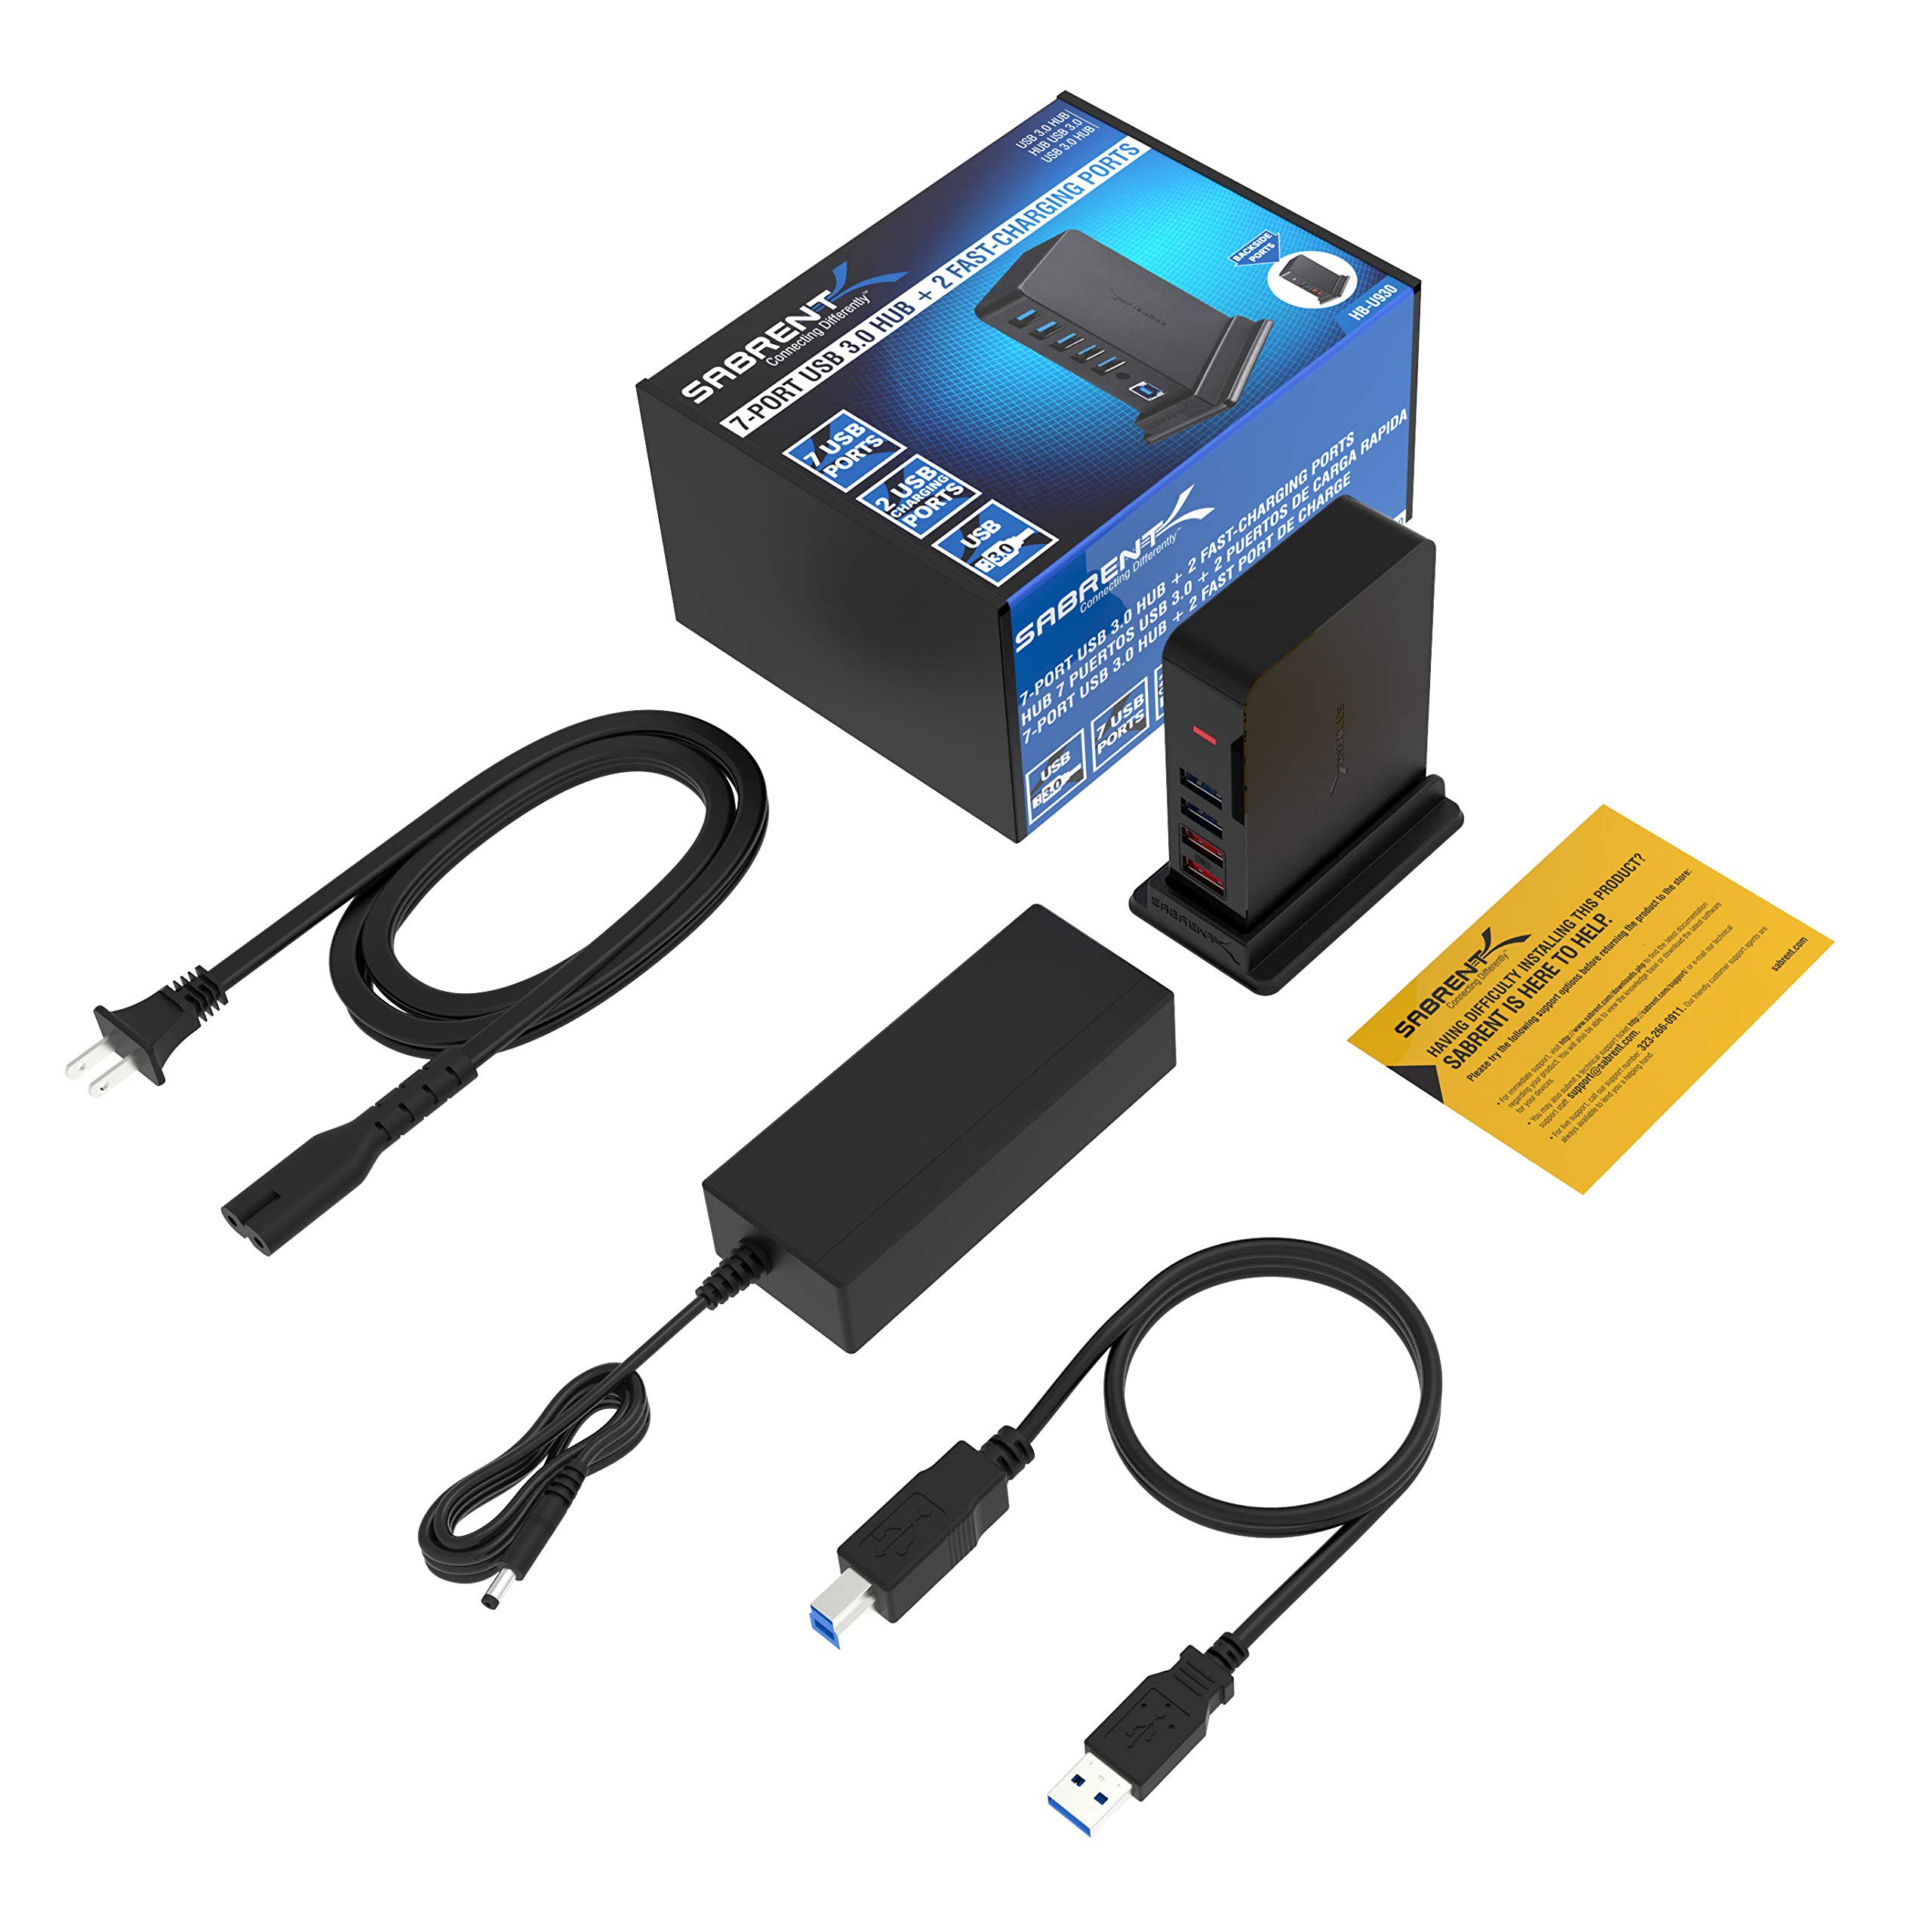 SABRENT 7 Port USB 3.0 HUB + 2 Charging Ports with 12V/4A Power Adapter [Black] (HB-U930)